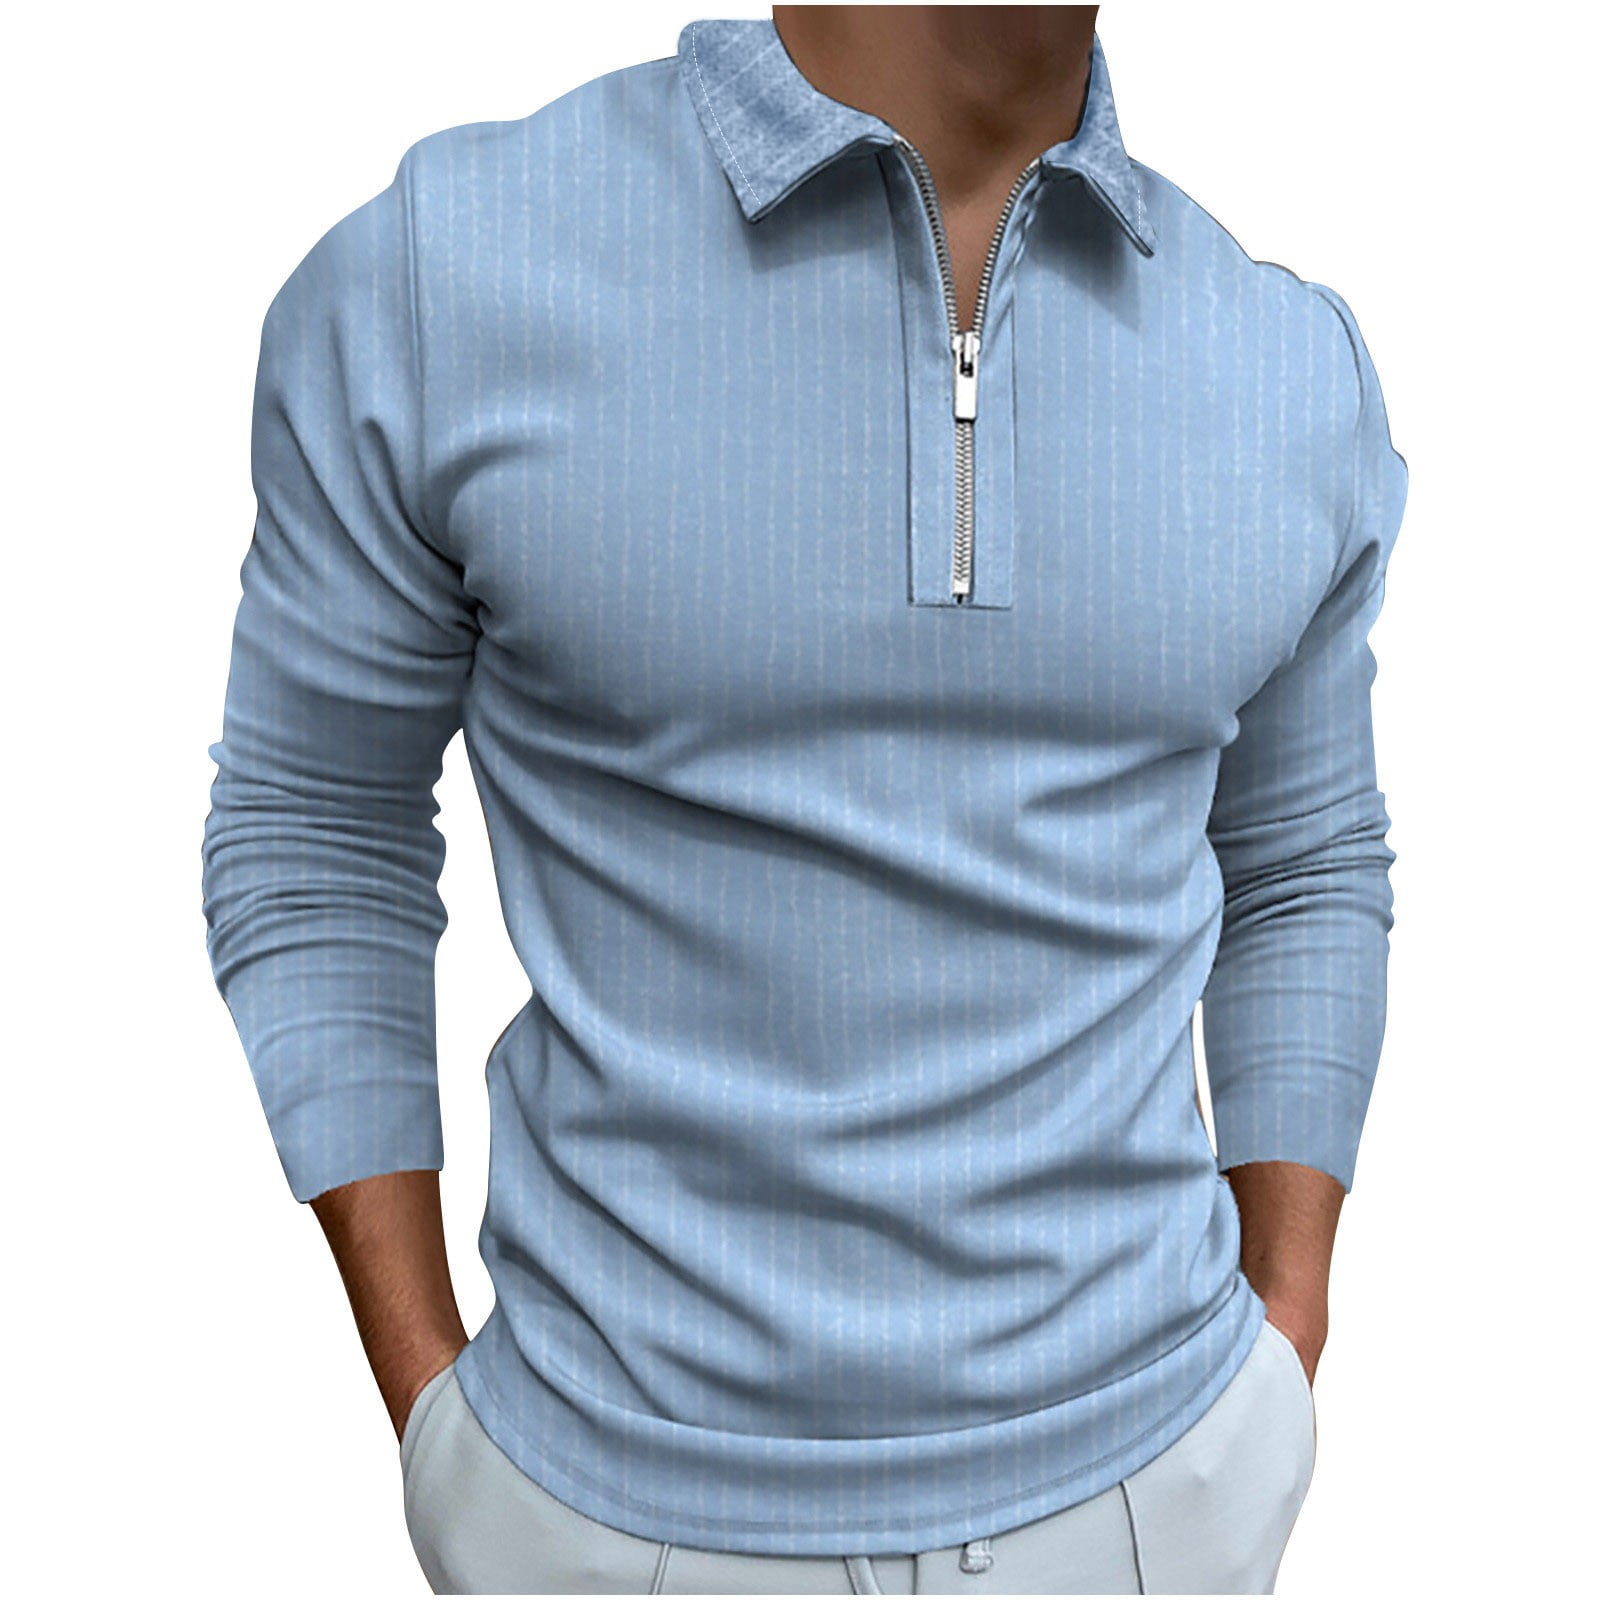  XTAPAN Men's Casual Long Sleeve Slim Fit Polo T Shirt